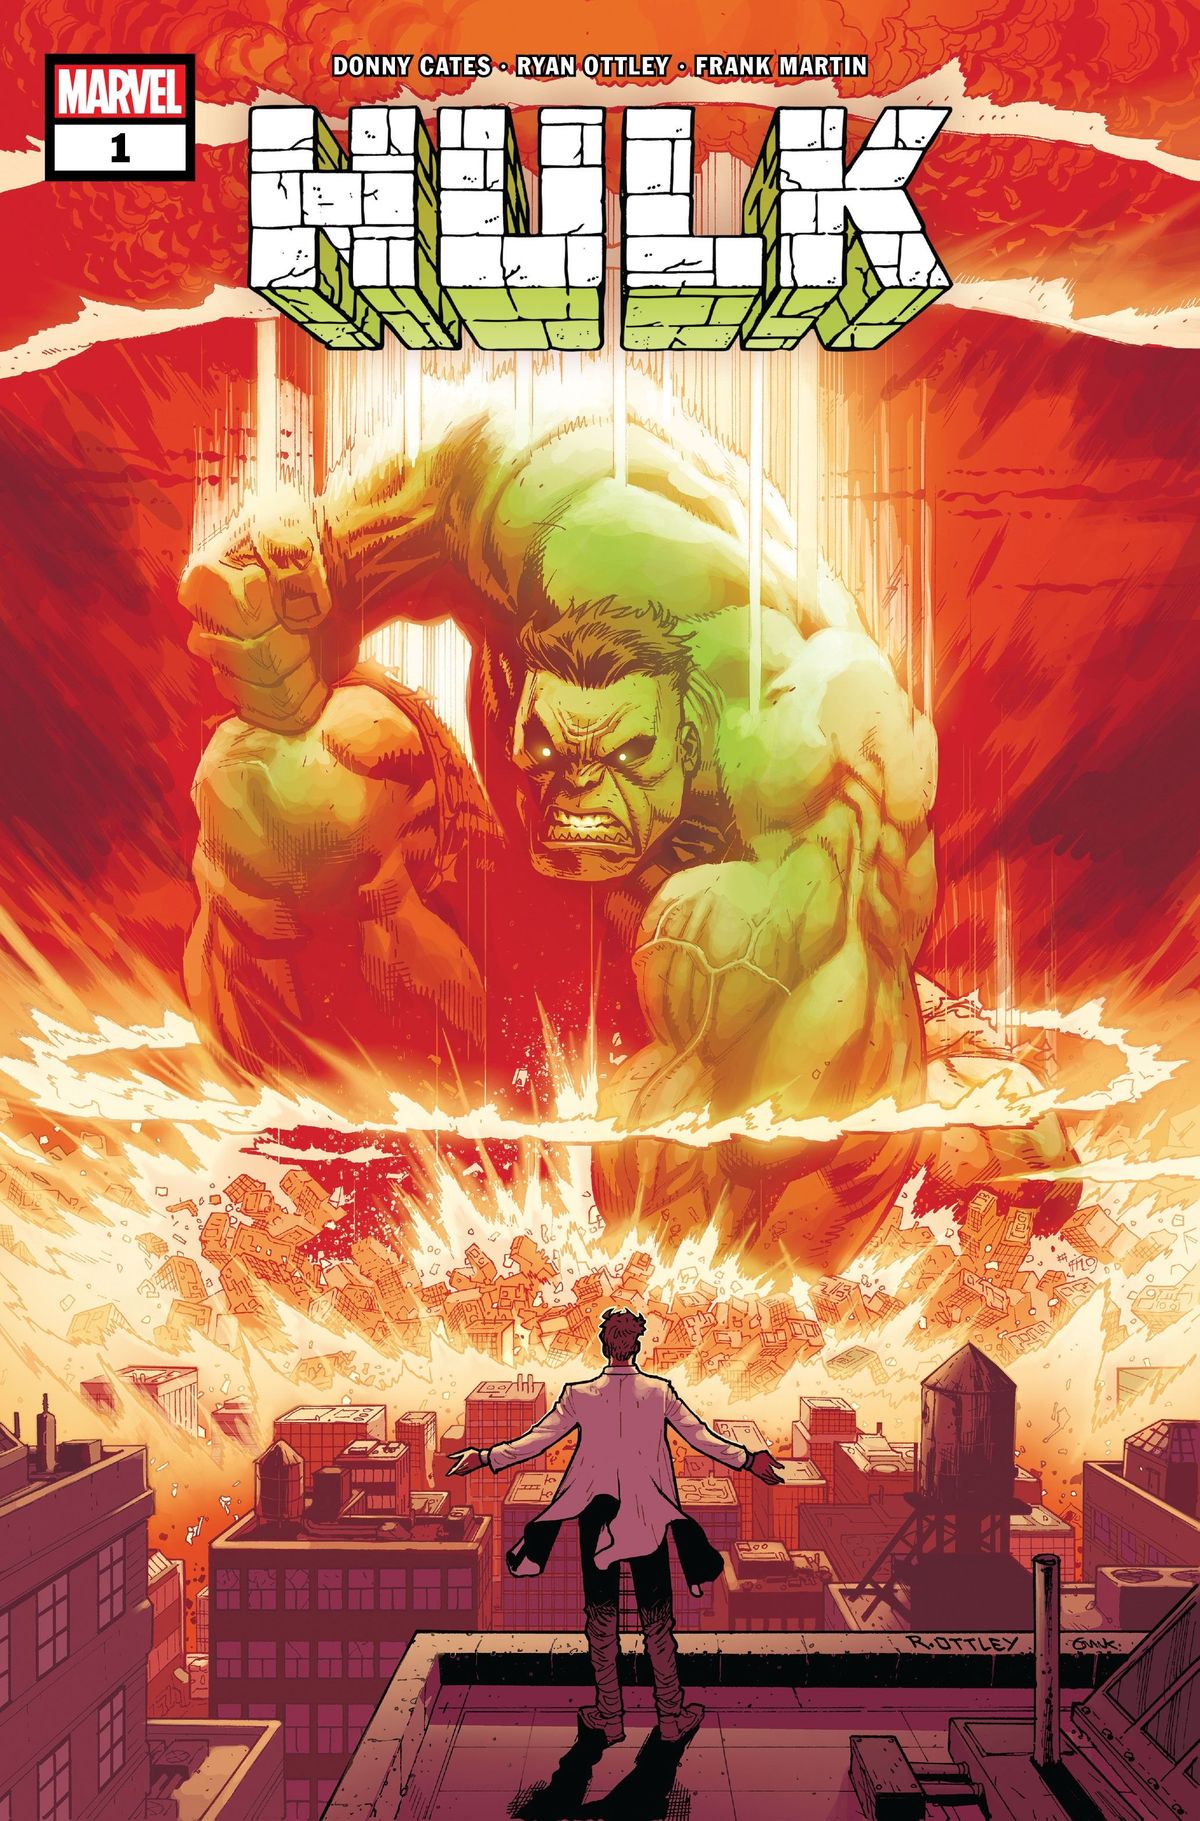 The Hulk: Cates & Ottley Are Pasukan Kreatif Pasca-Abadi Marvel